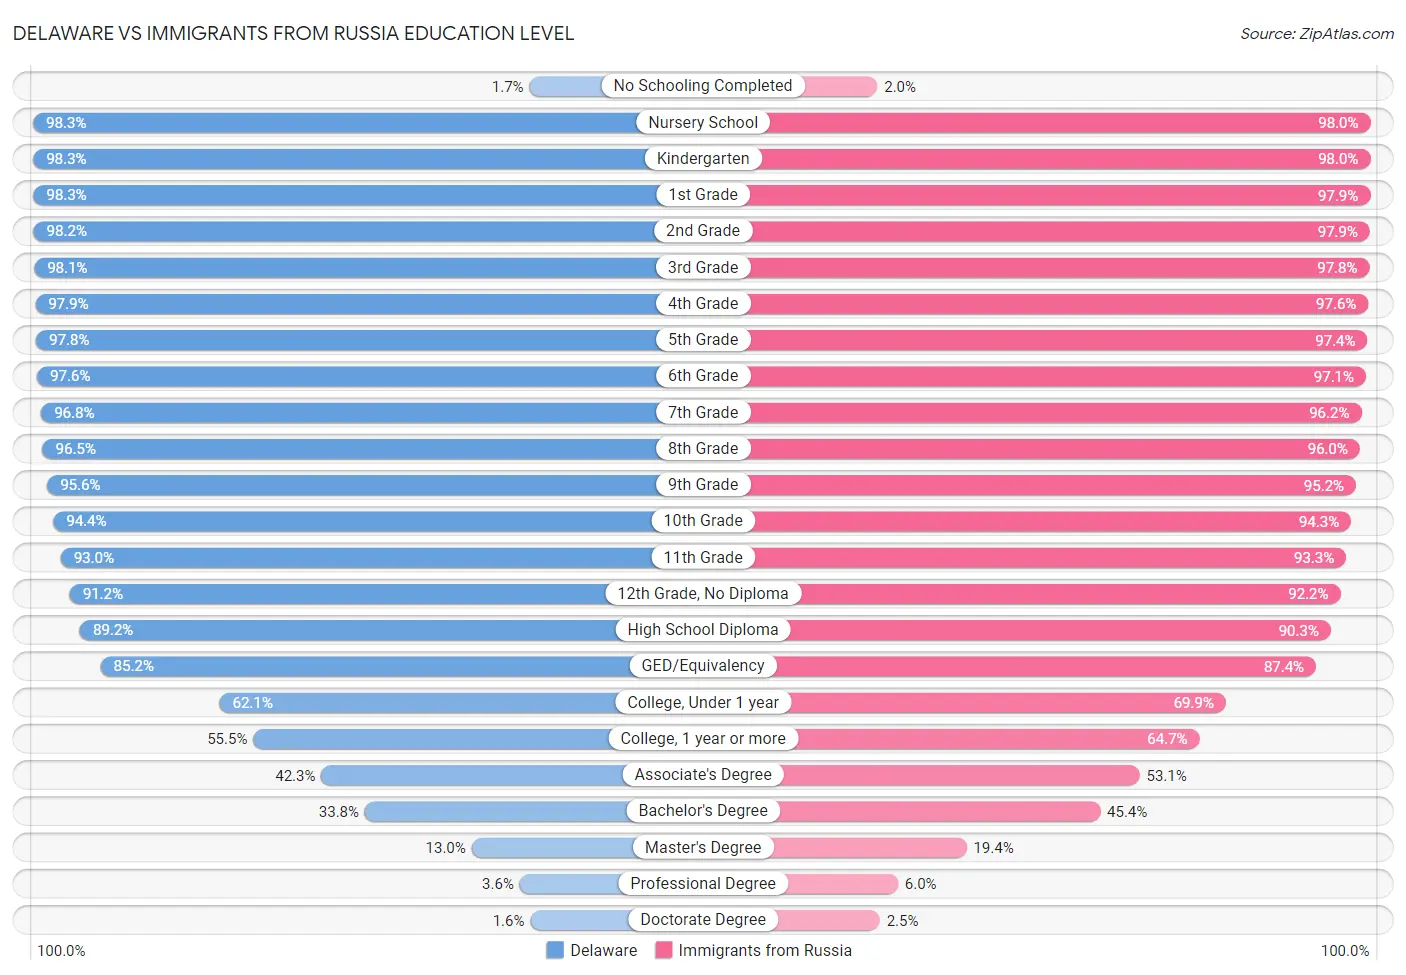 Delaware vs Immigrants from Russia Education Level